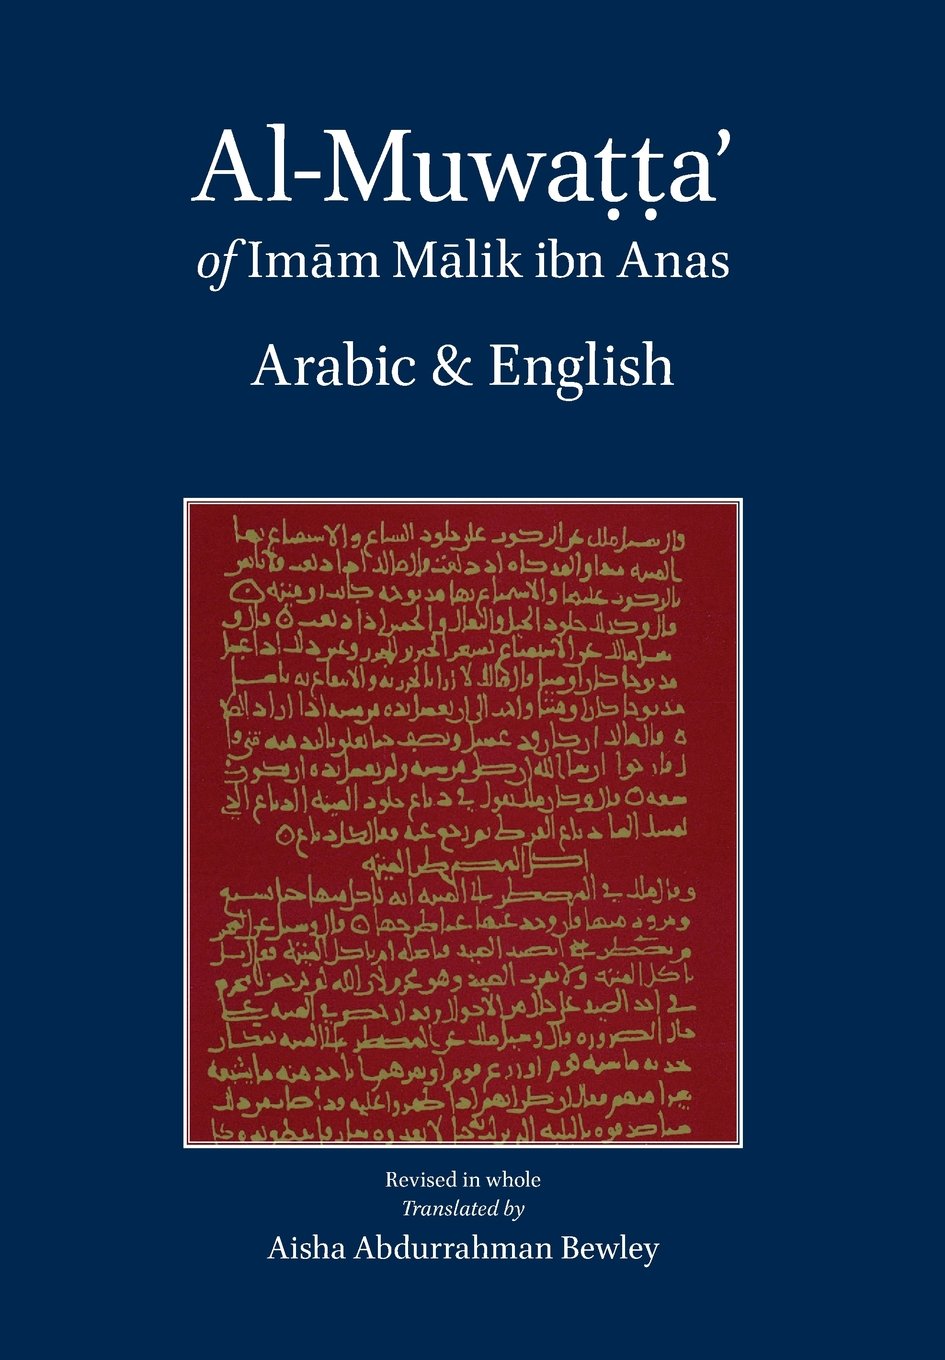 Al-Muwatta of Imam Malik - Arabic-English Hardcover